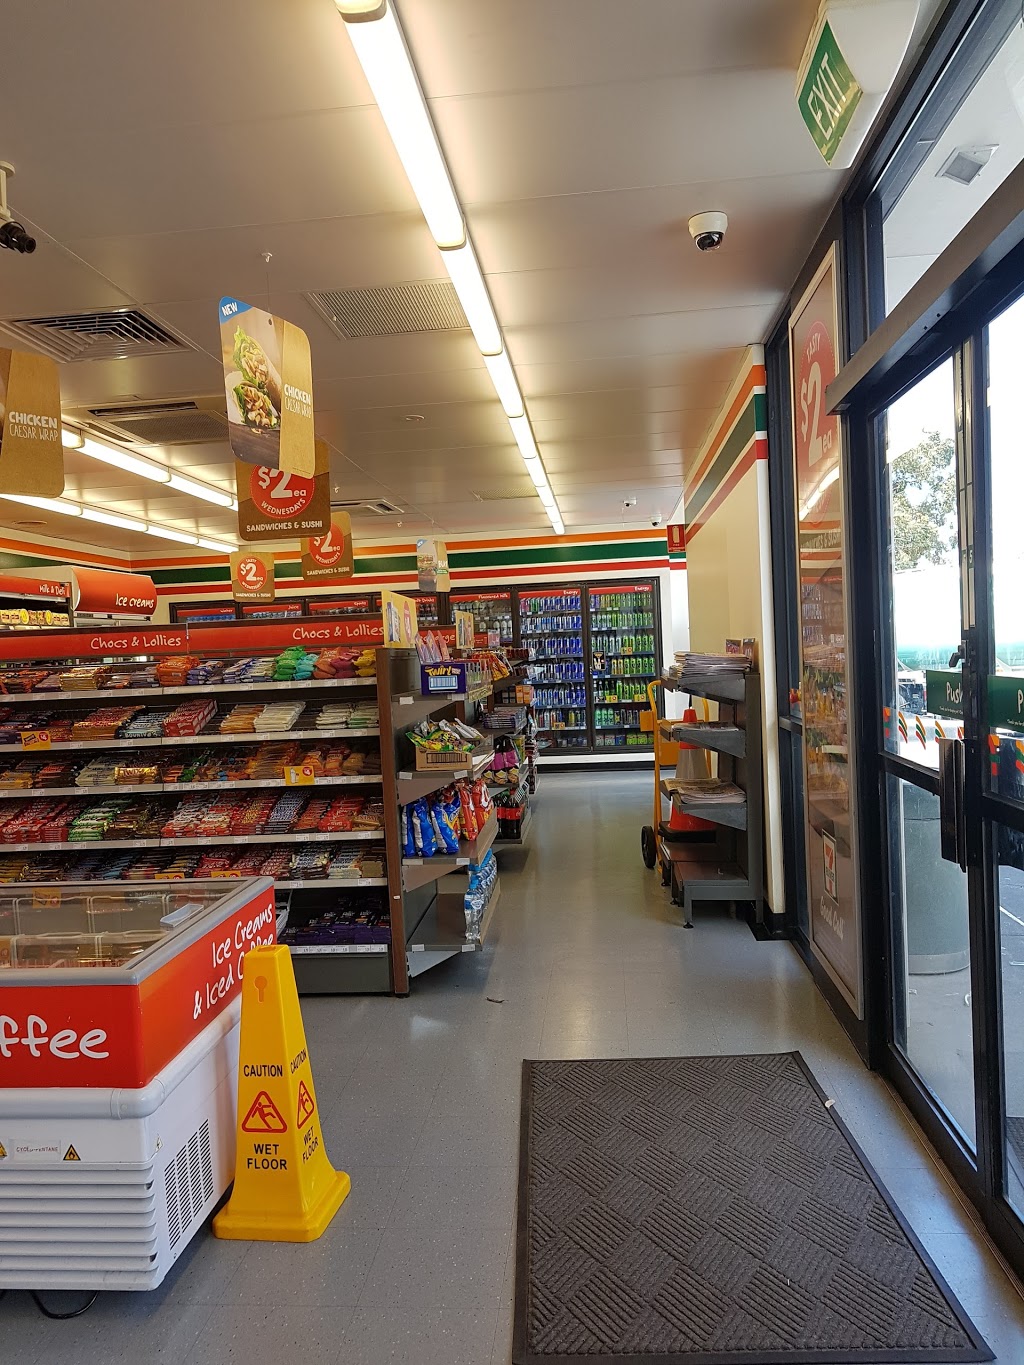 7-Eleven Upwey | convenience store | 1441 Burwood Hwy &, Mast Gully Rd, Upwey VIC 3158, Australia | 0397543073 OR +61 3 9754 3073